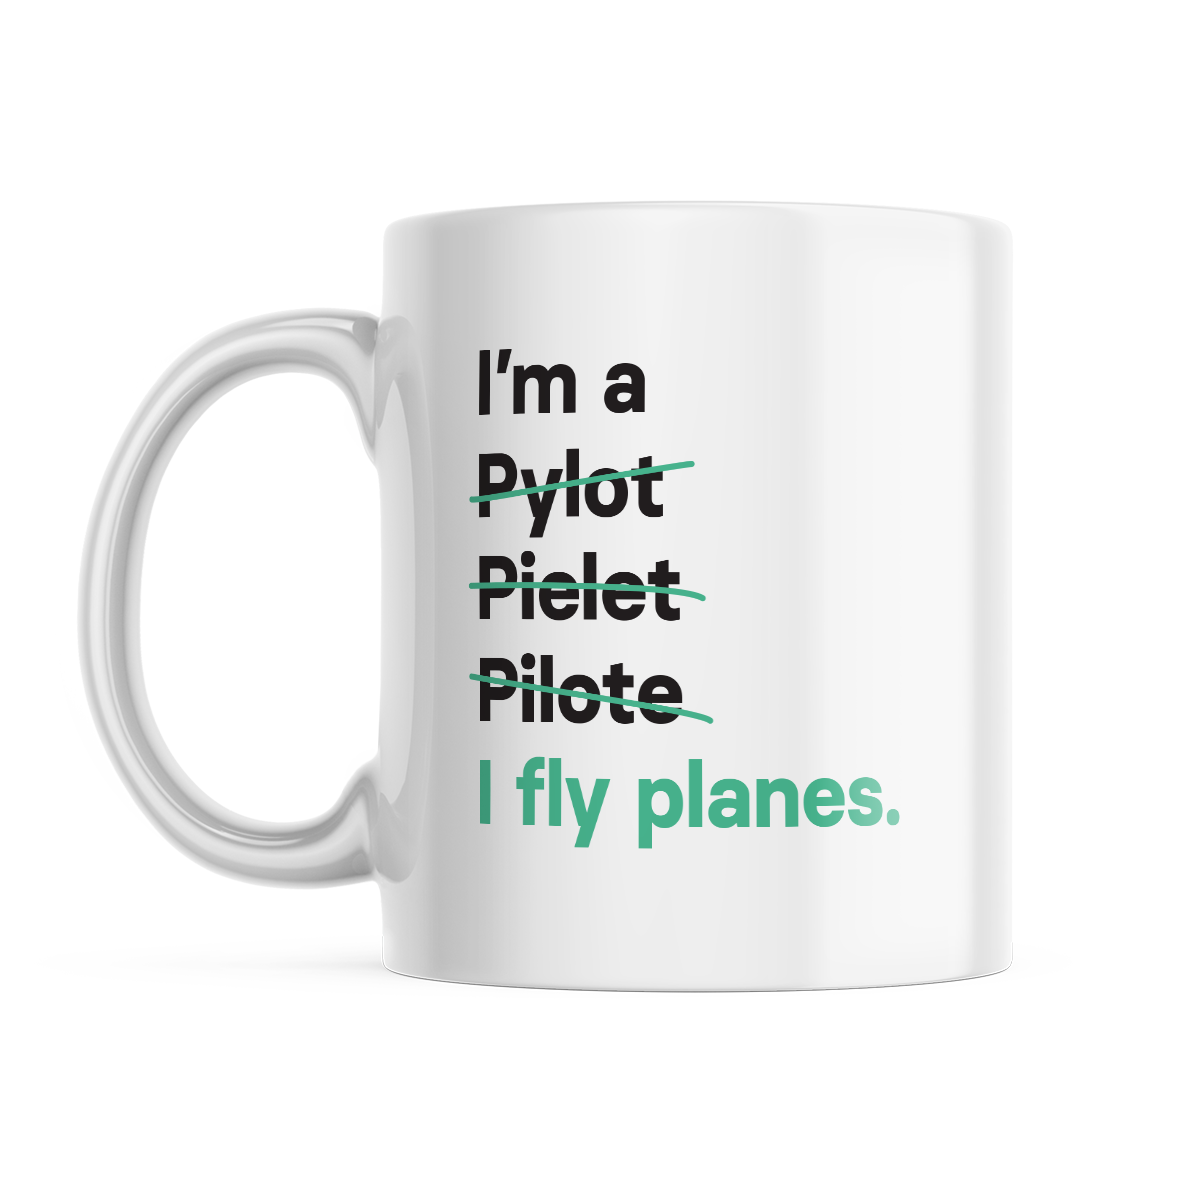 I'm a Pilot